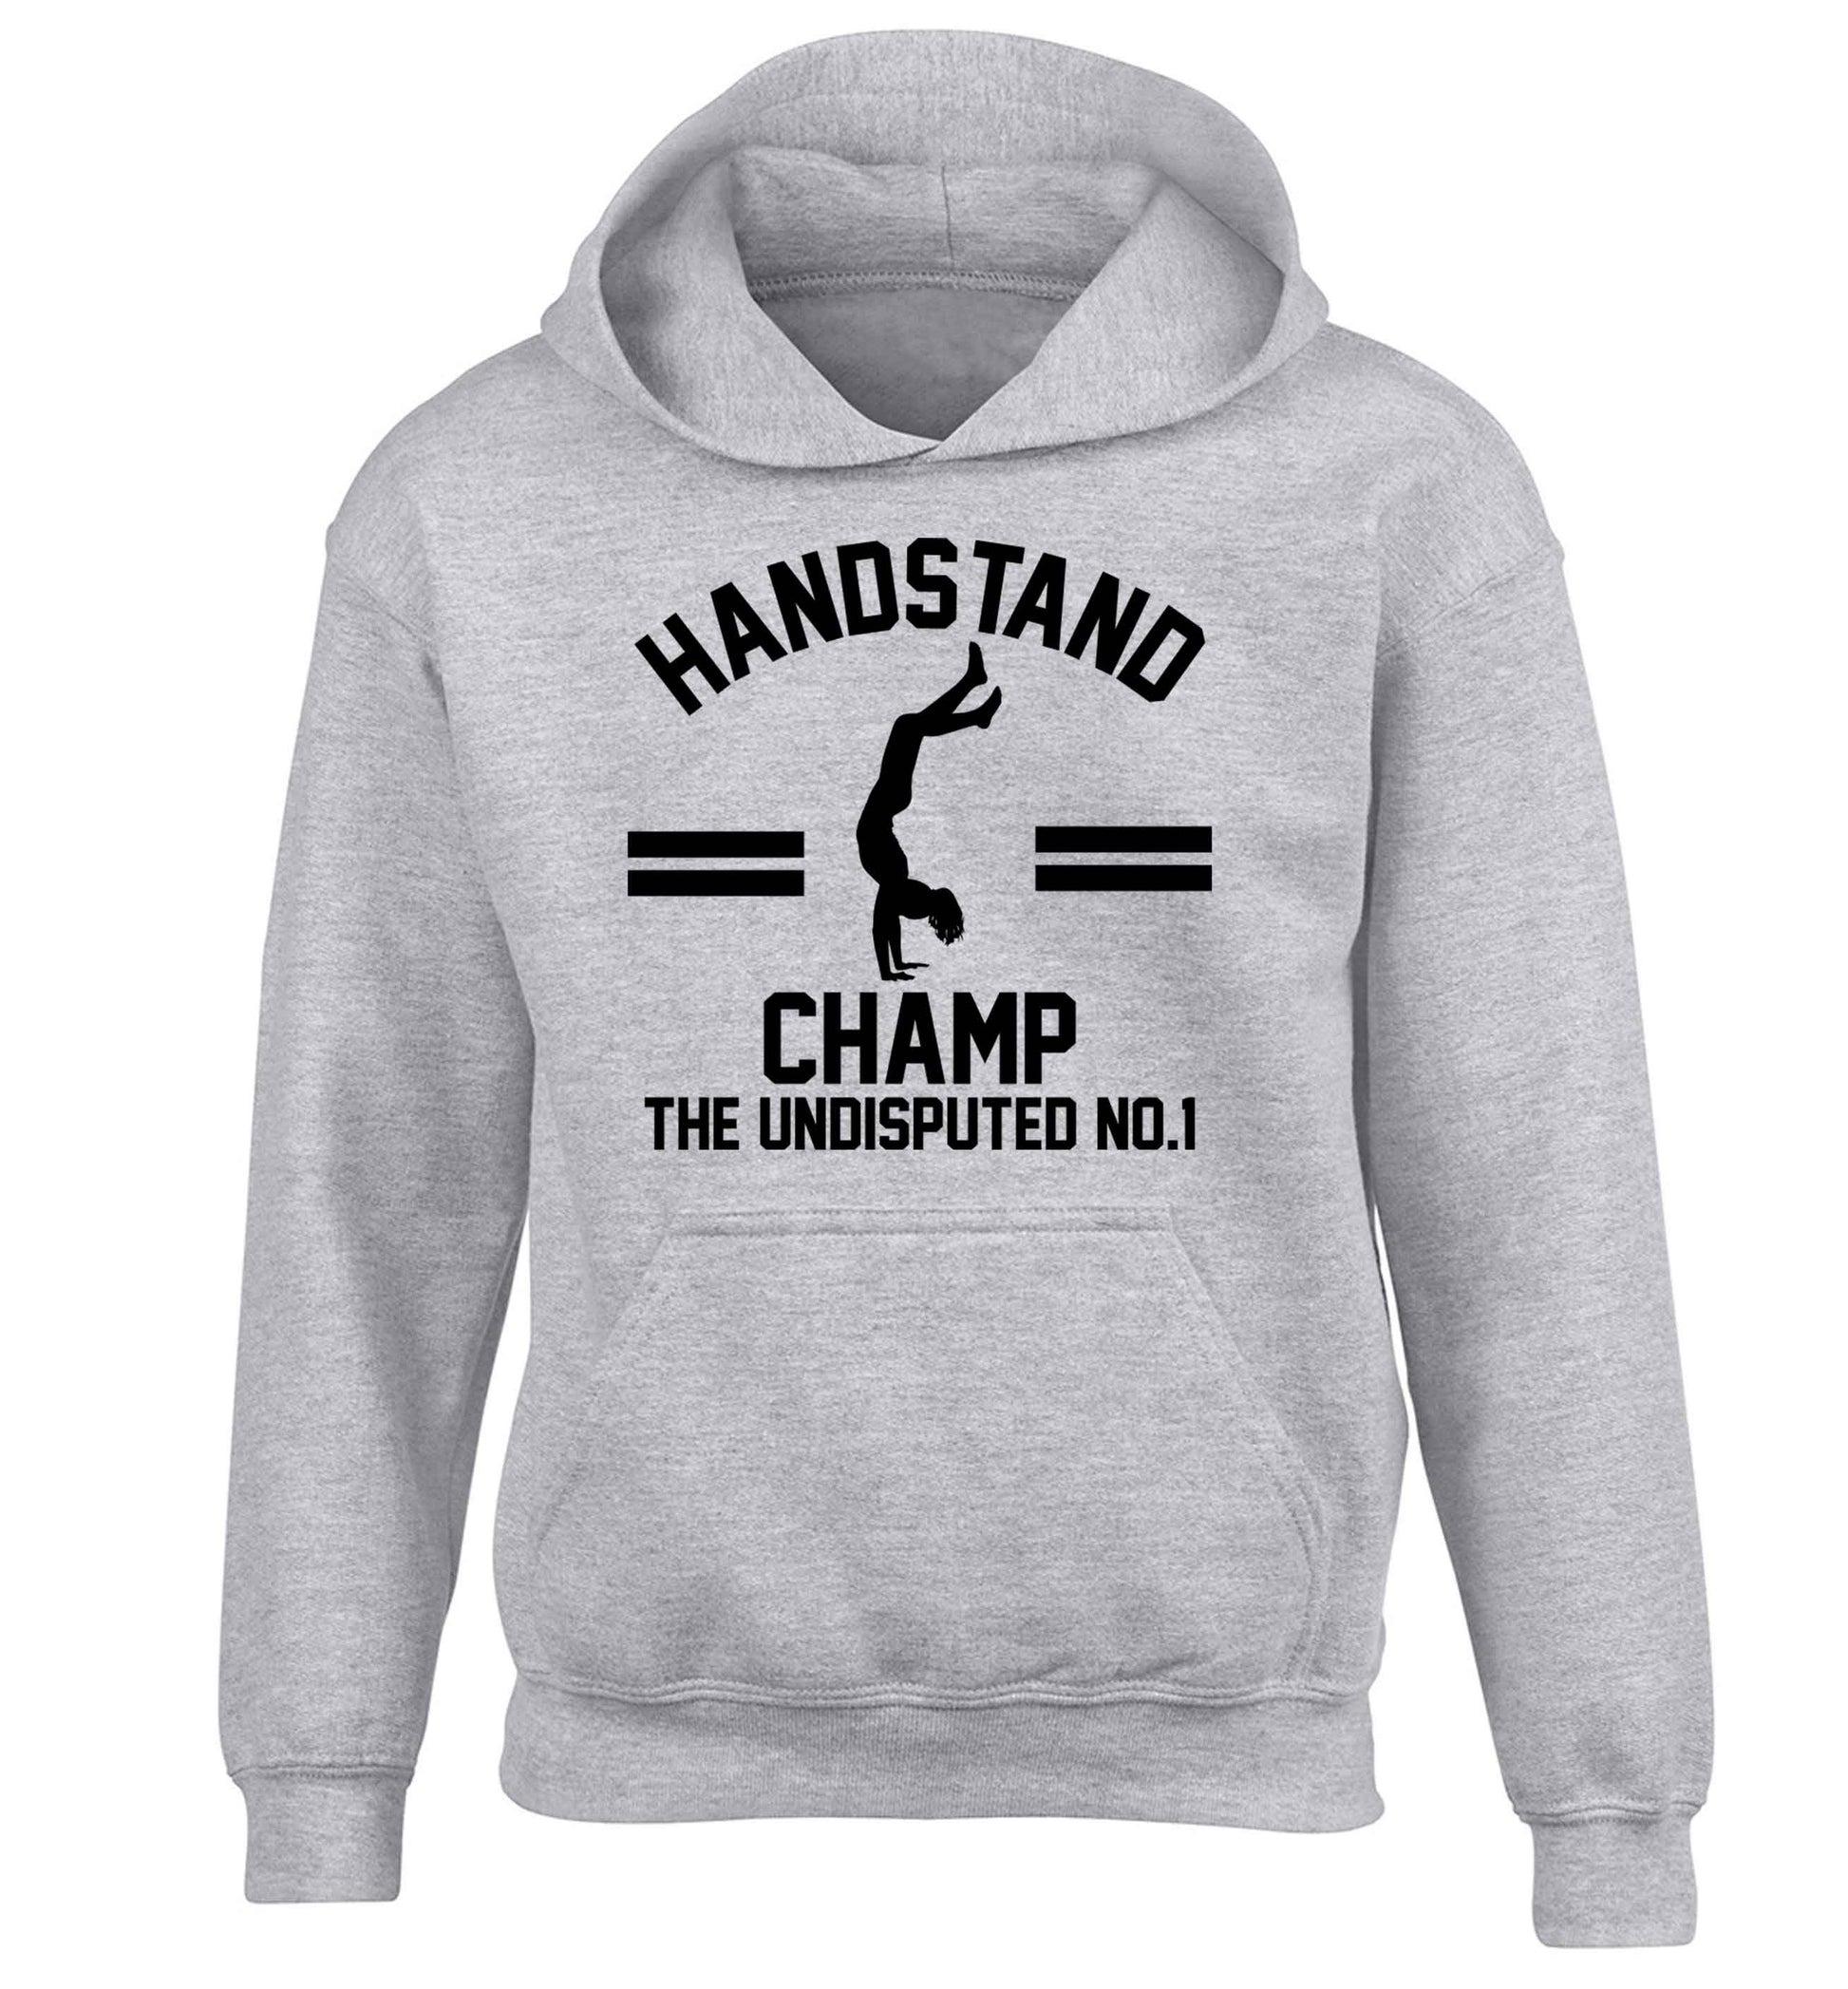 Undisputed handstand championship no.1  children's grey hoodie 12-13 Years